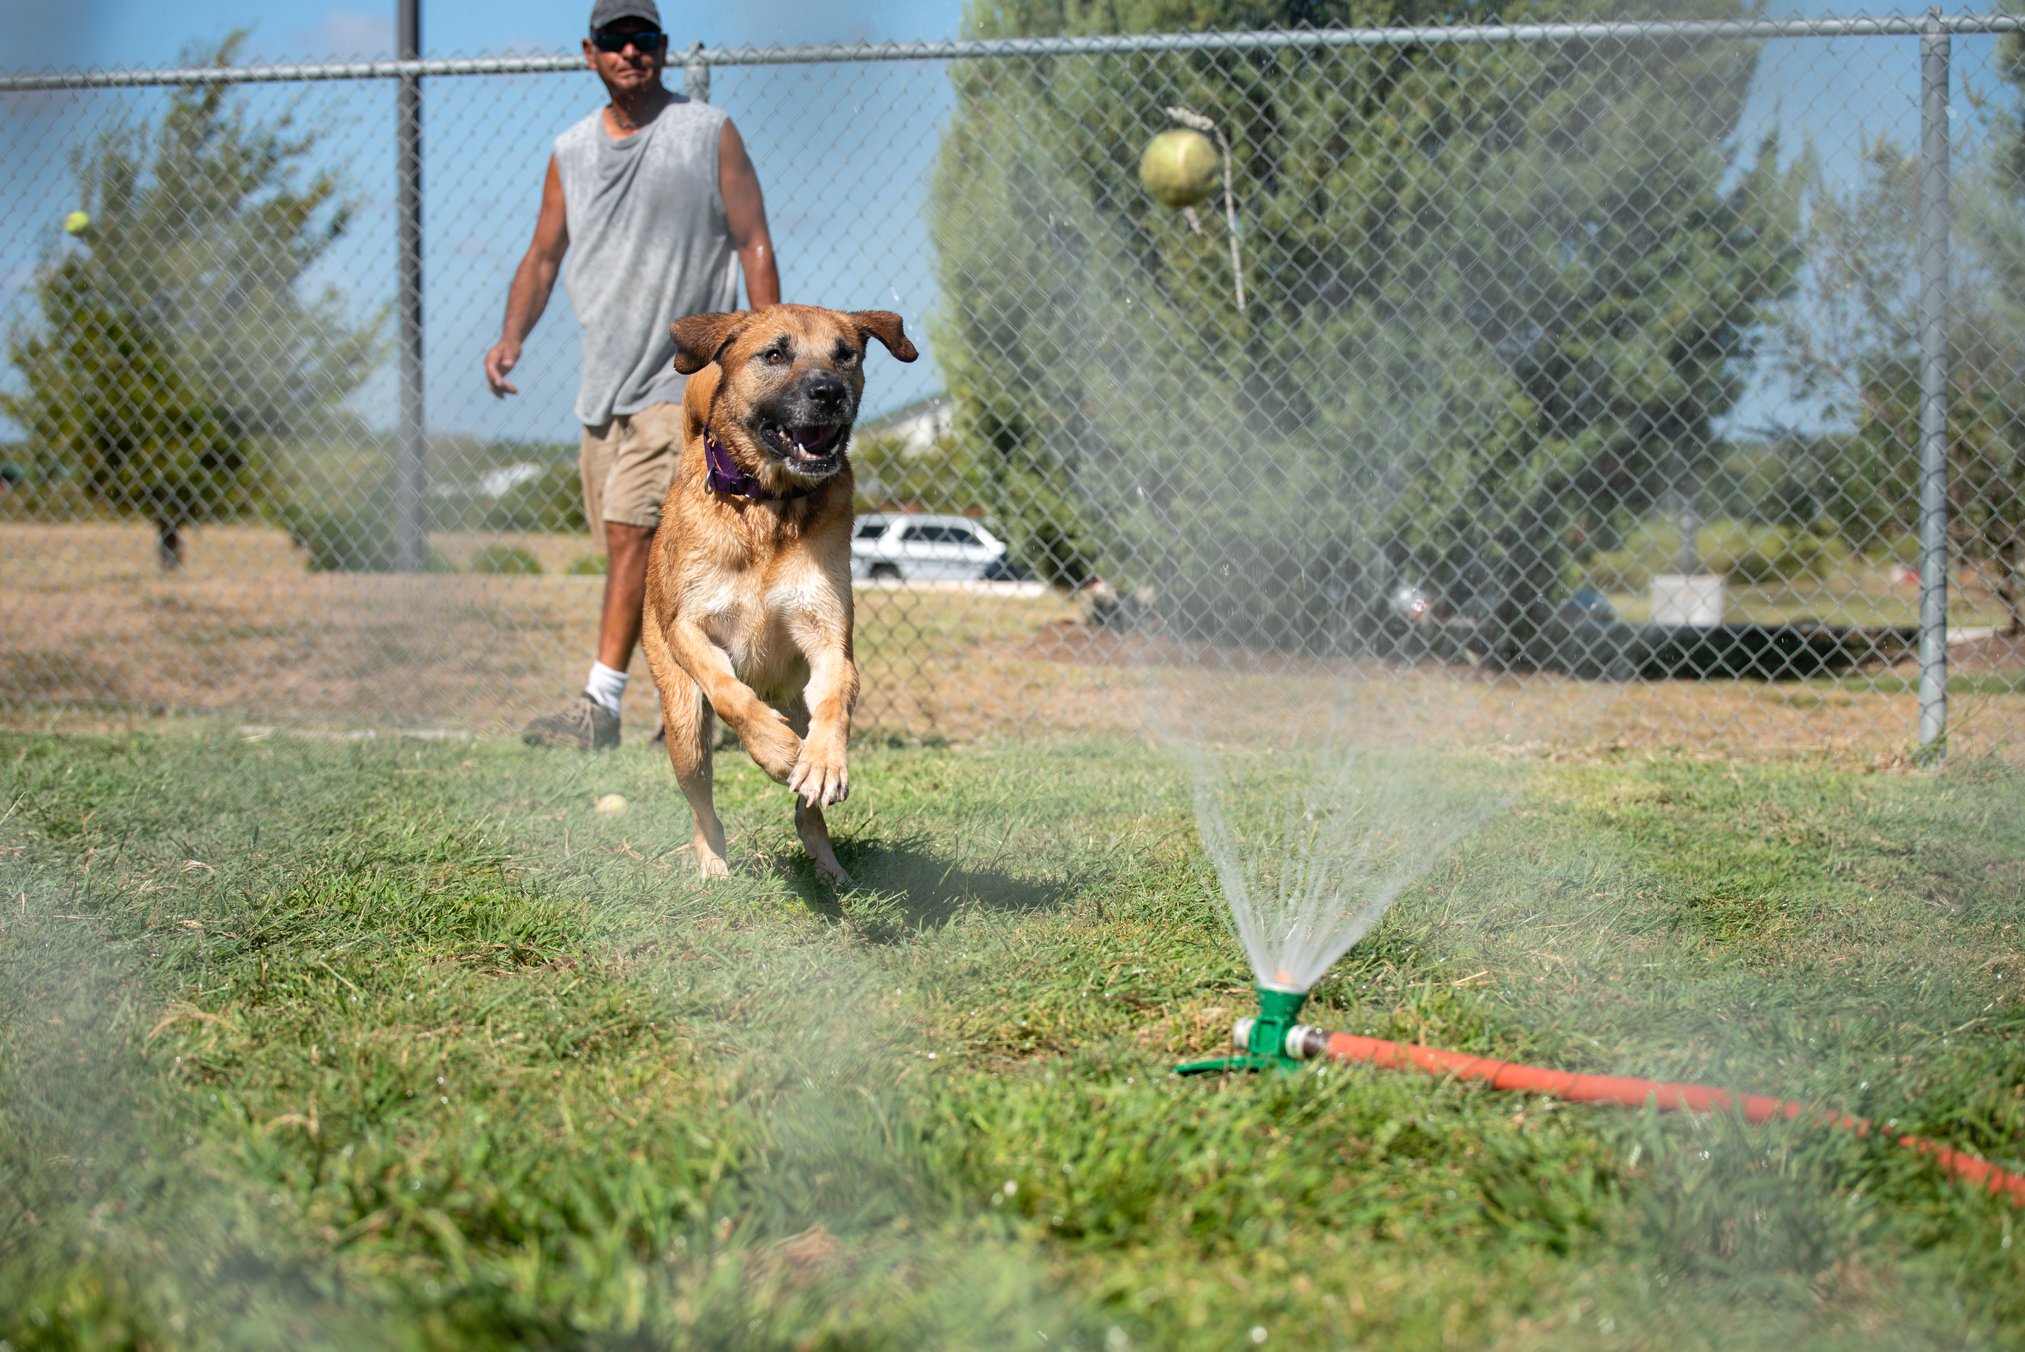 Dog playing in sprinkler with volunteer